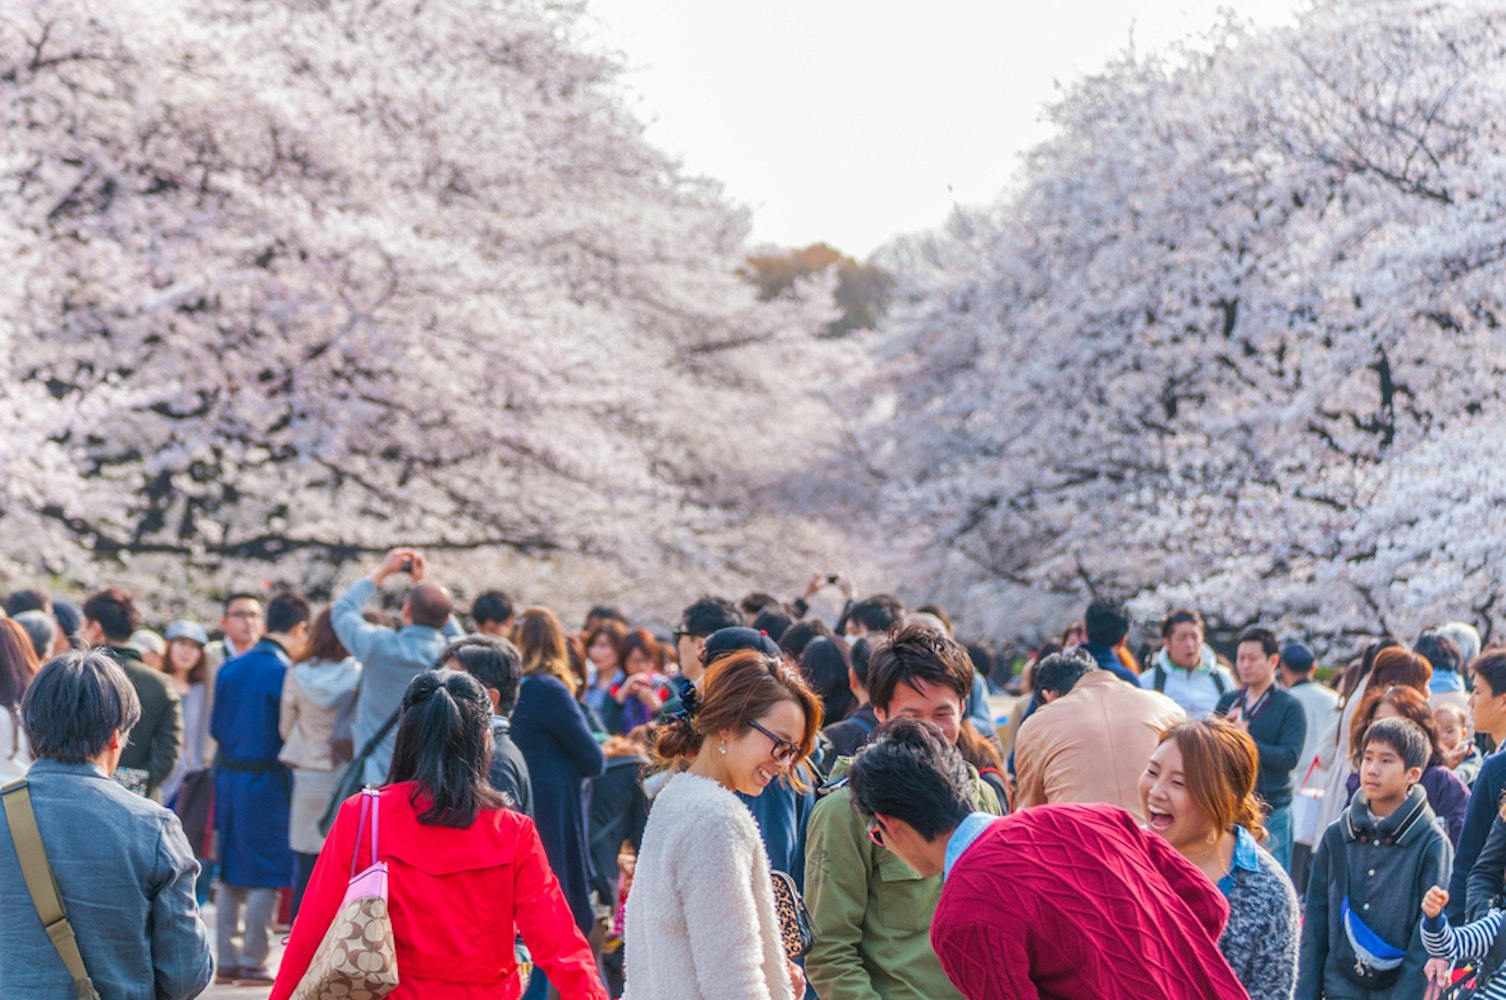 Tokyo Crowd enjoying Cherry blossoms festival in Ueno Park.